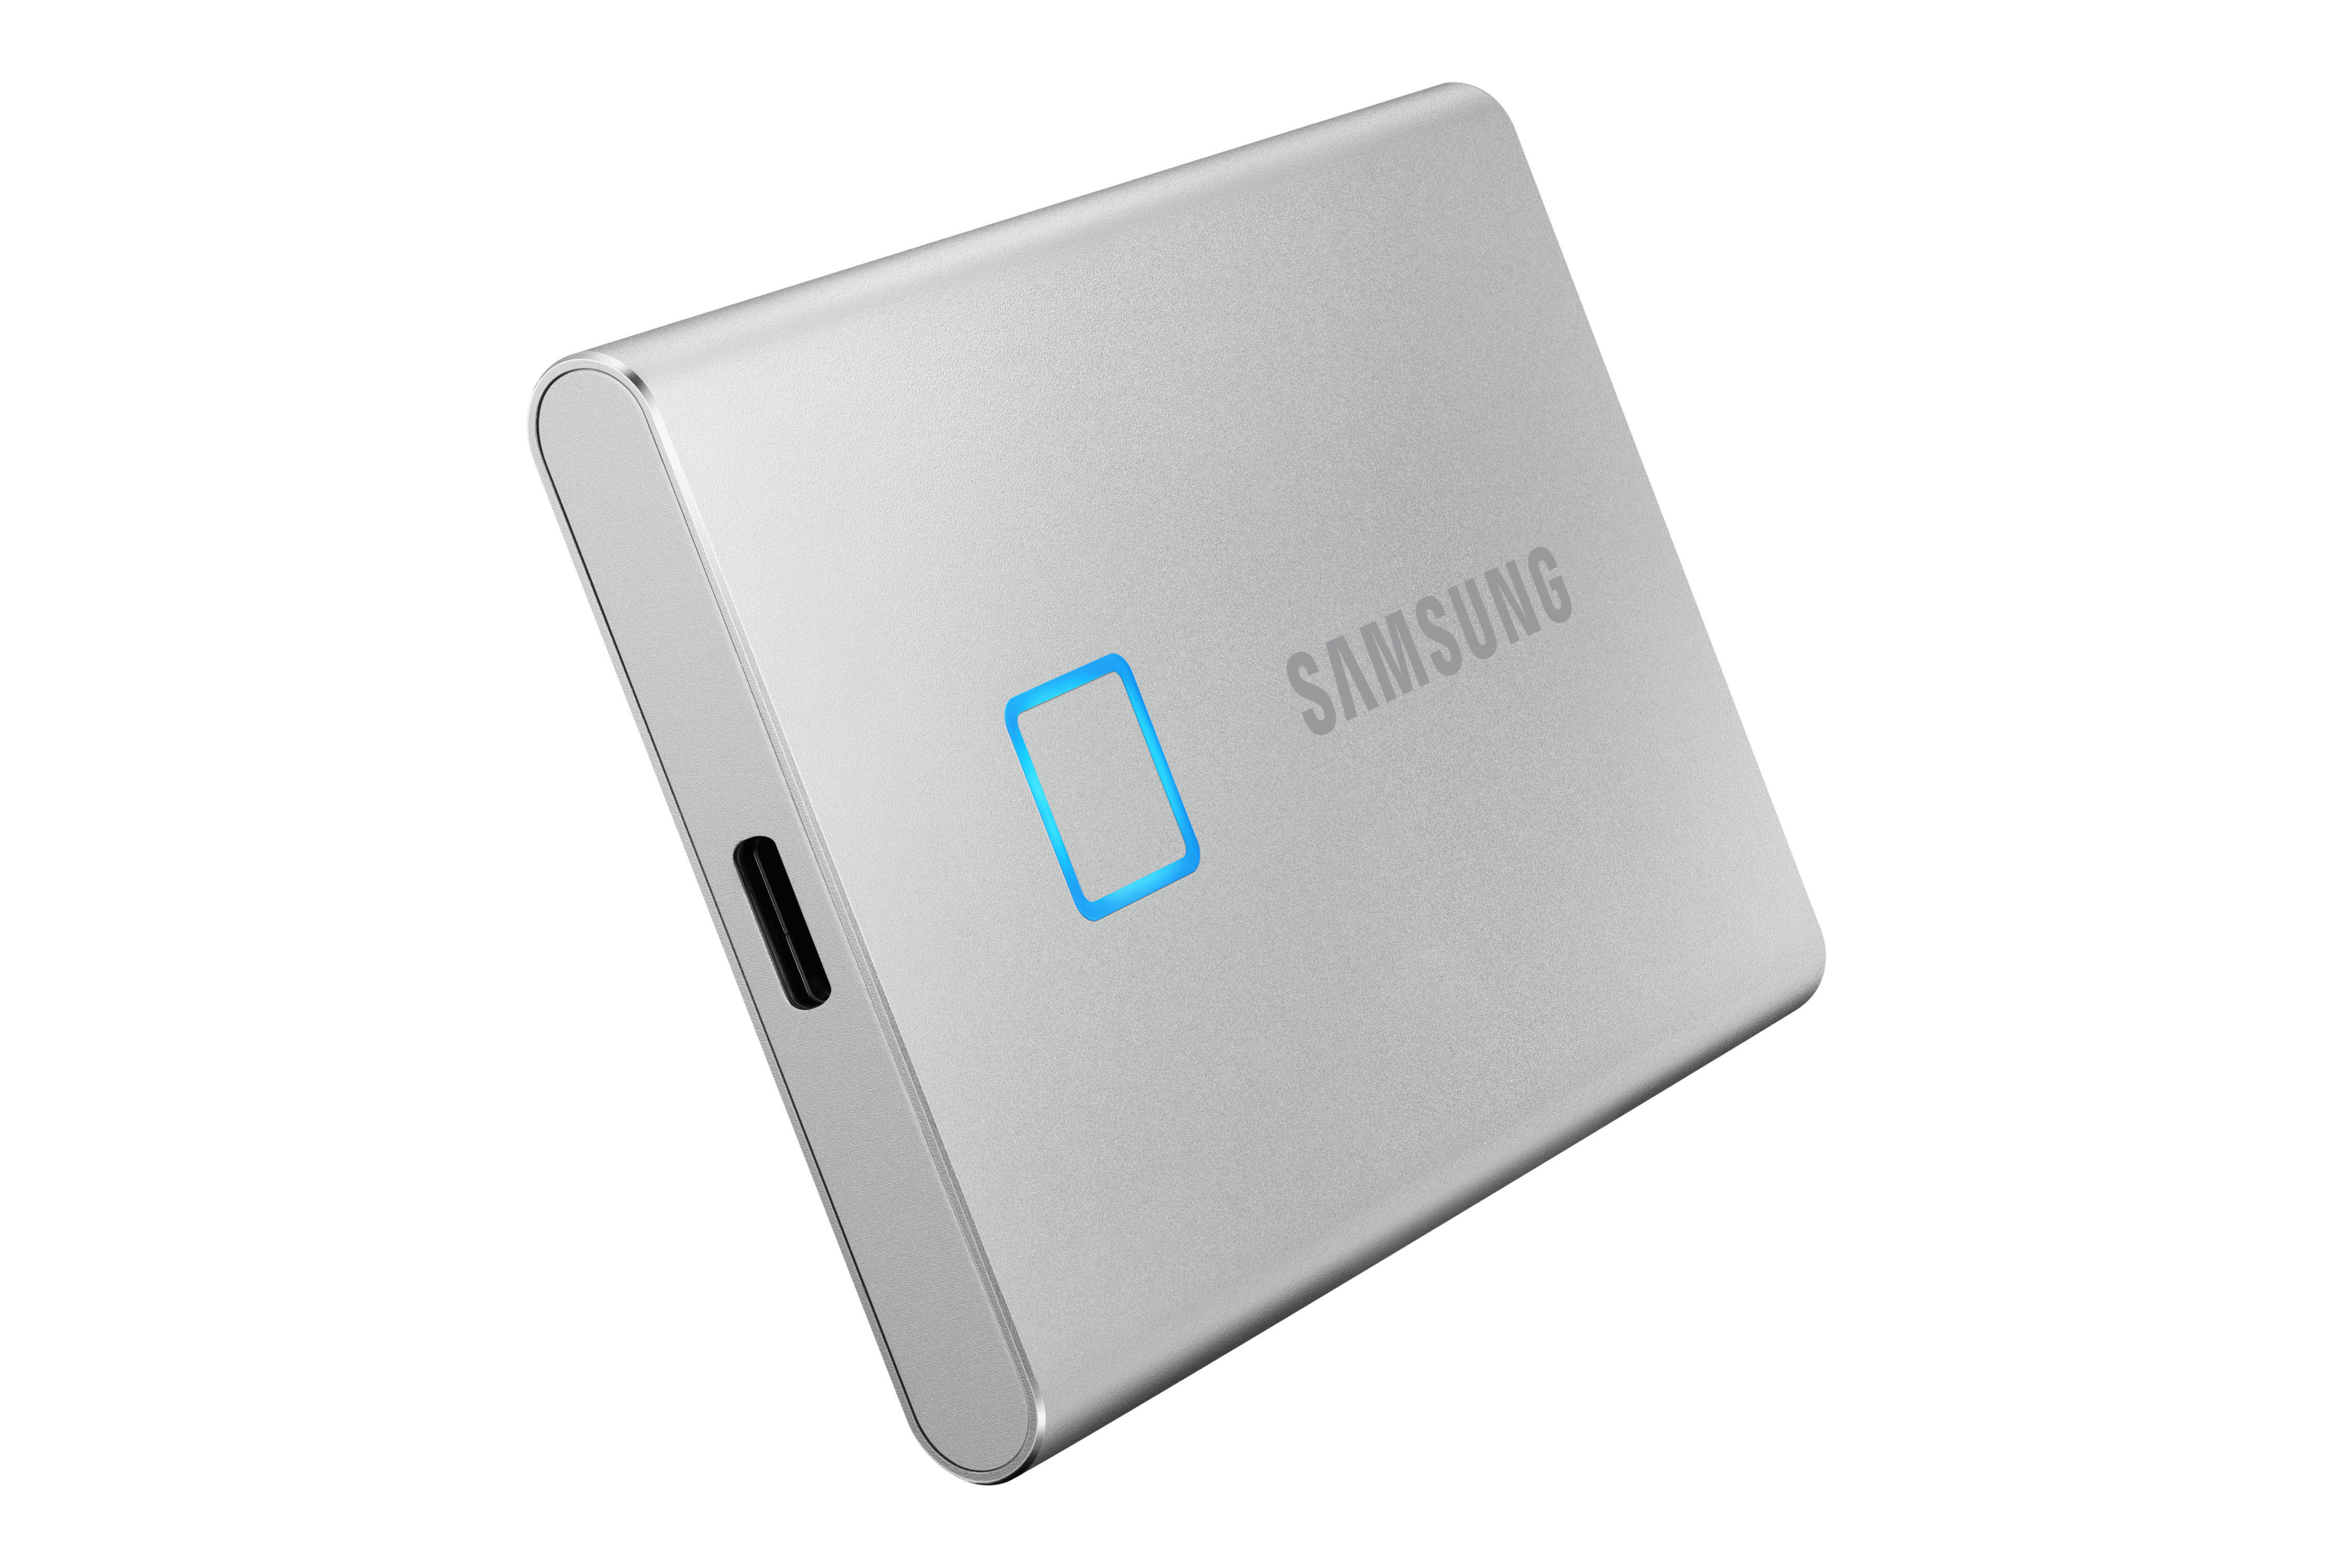 SAMSUNG Touch Festplatte, T7 Portable TB 1 Silber SSD, extern, SSD